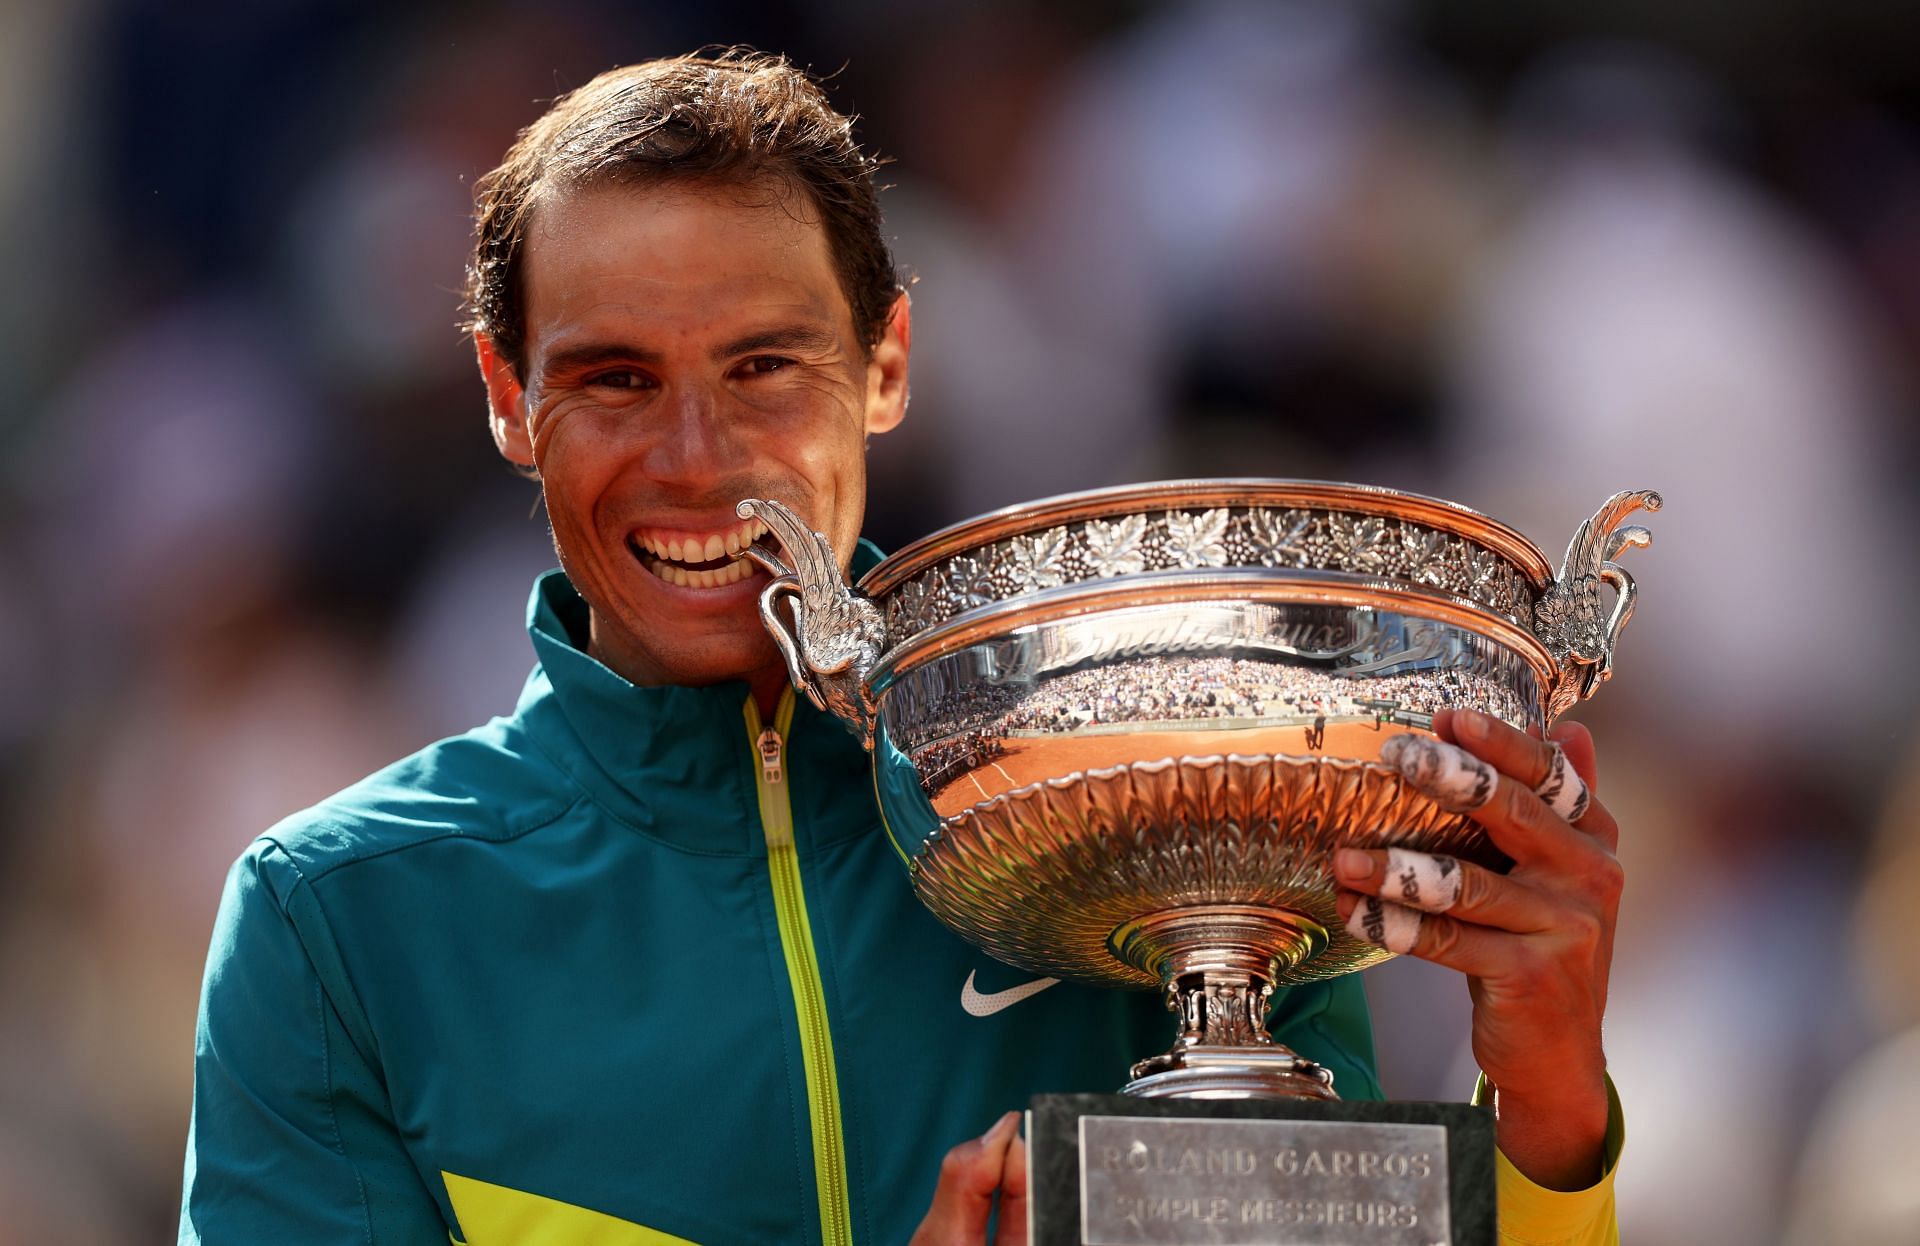 Rafael Nadal won his 22nd Grand Slam title